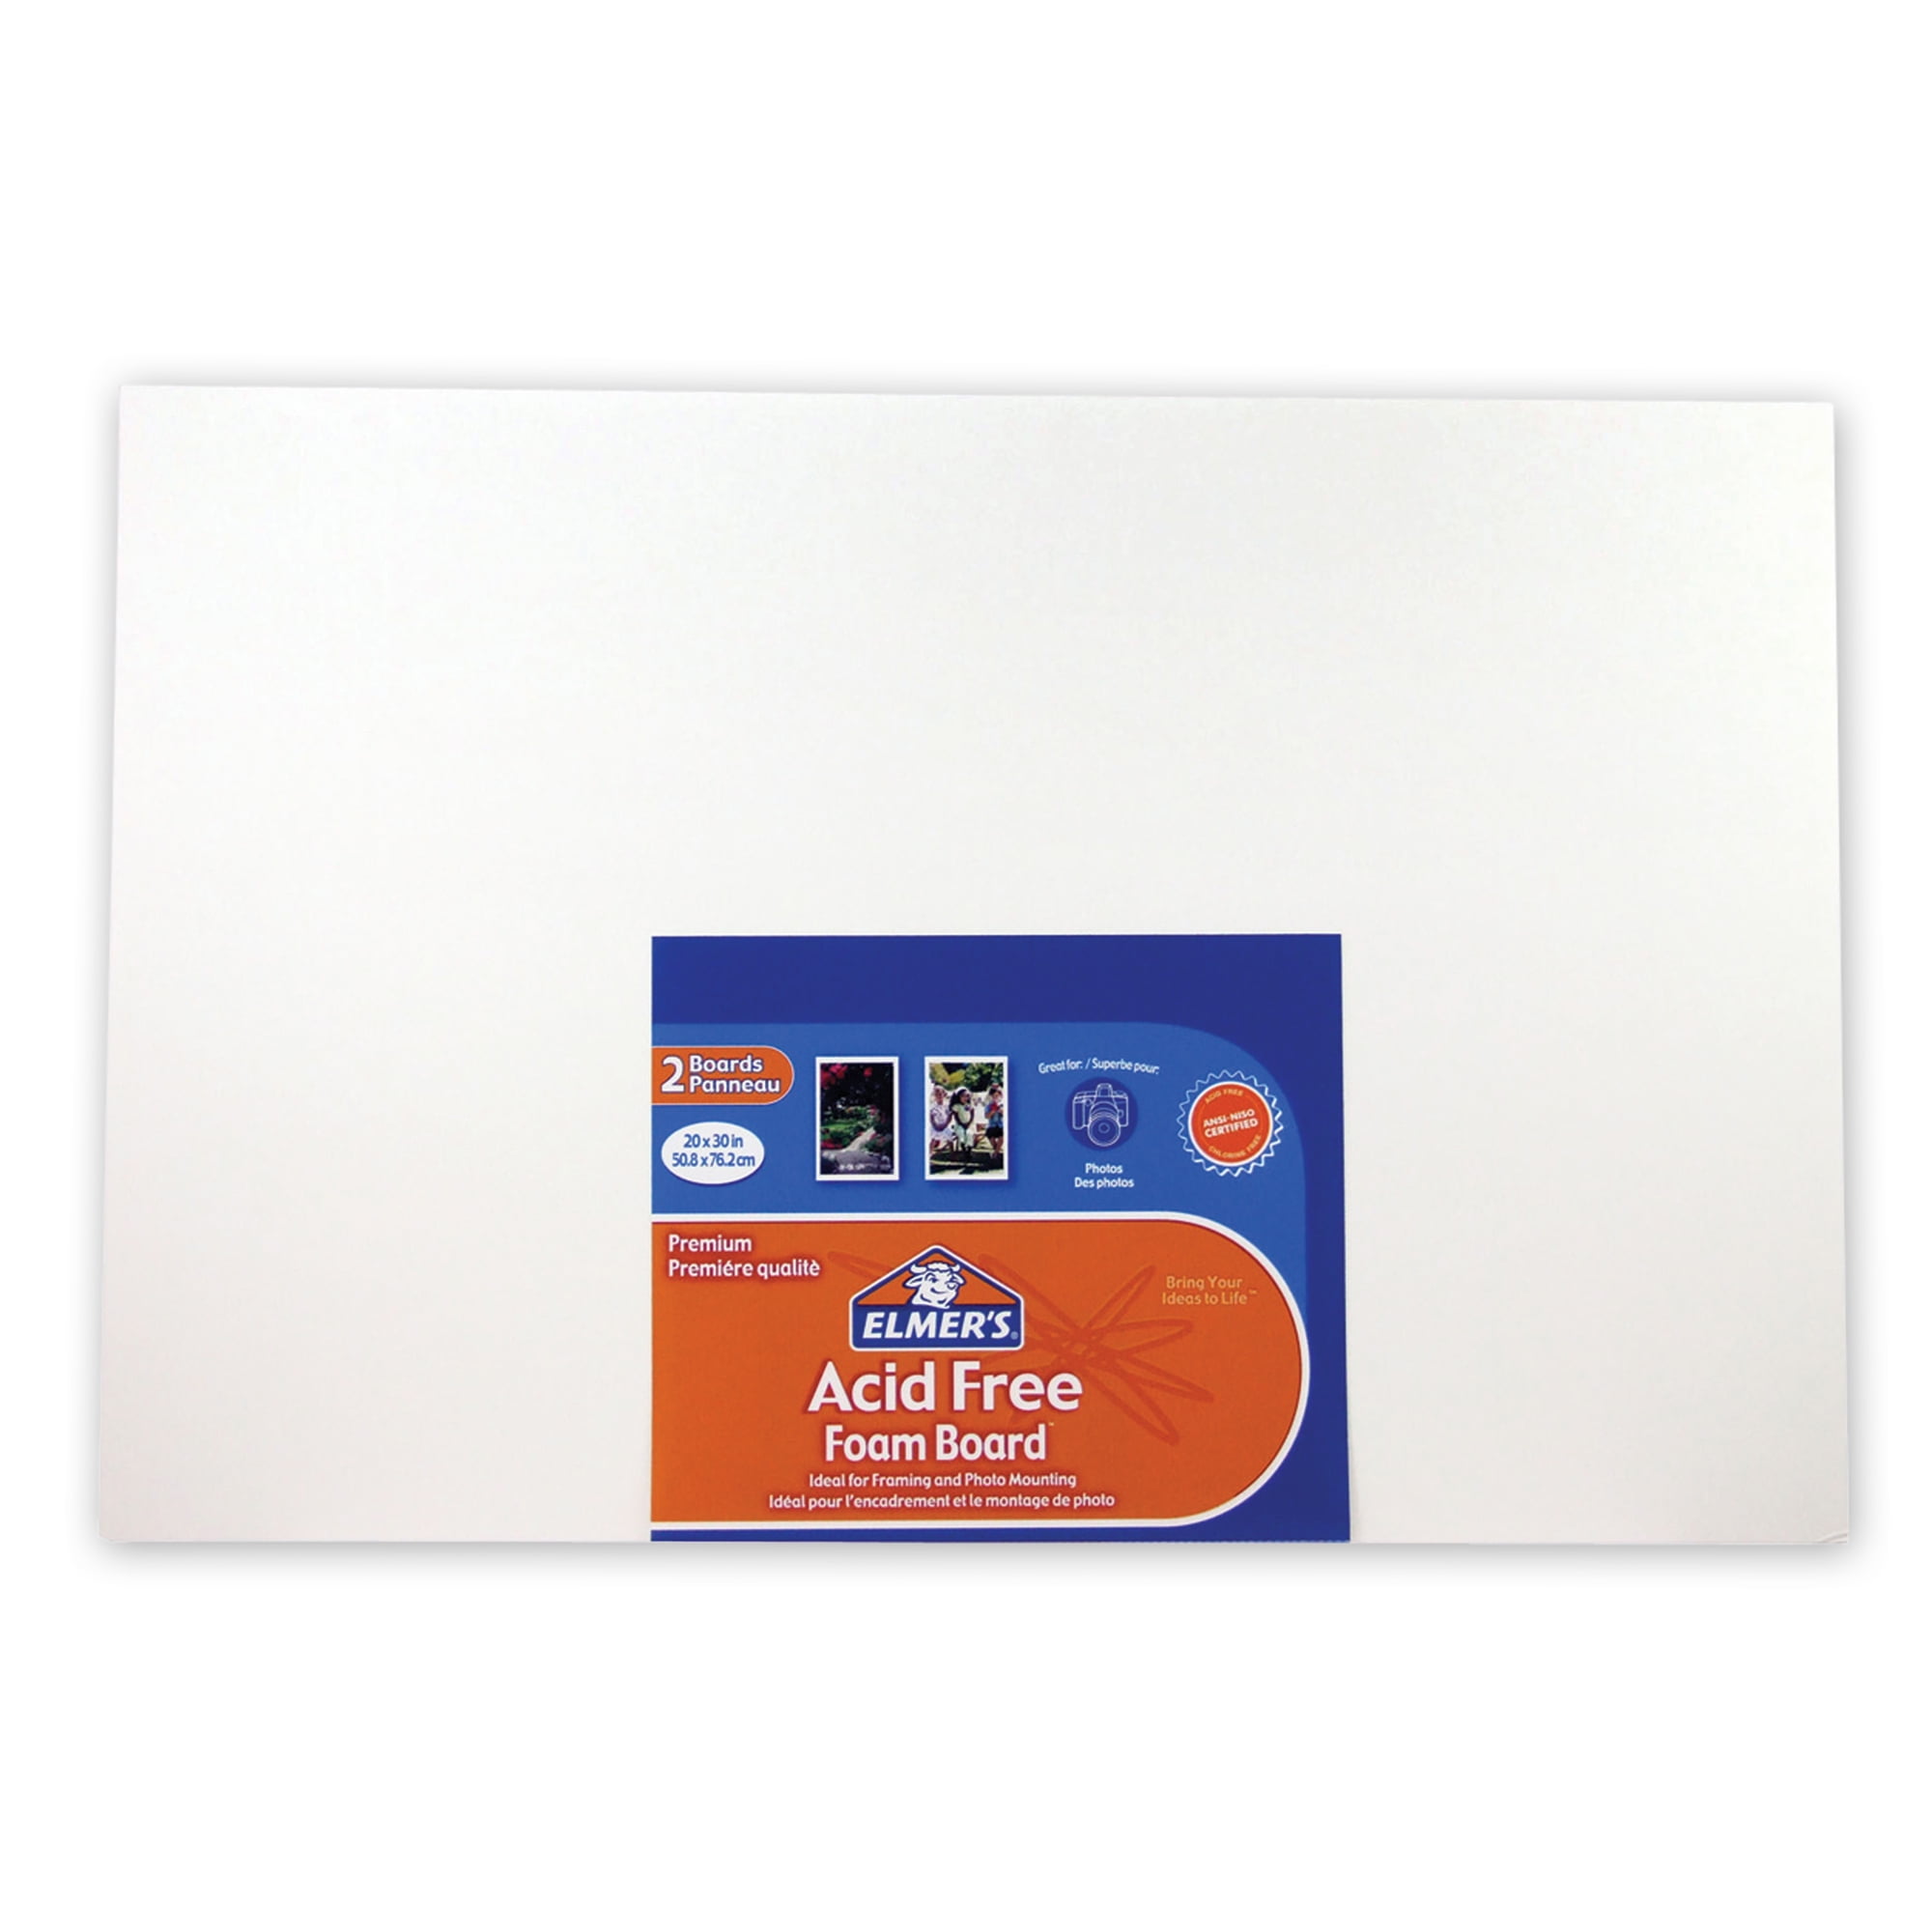 Fome-Cor (Formerly Elmers) Singlestep Heat Adhesive Foam Board - 24x36 ✓